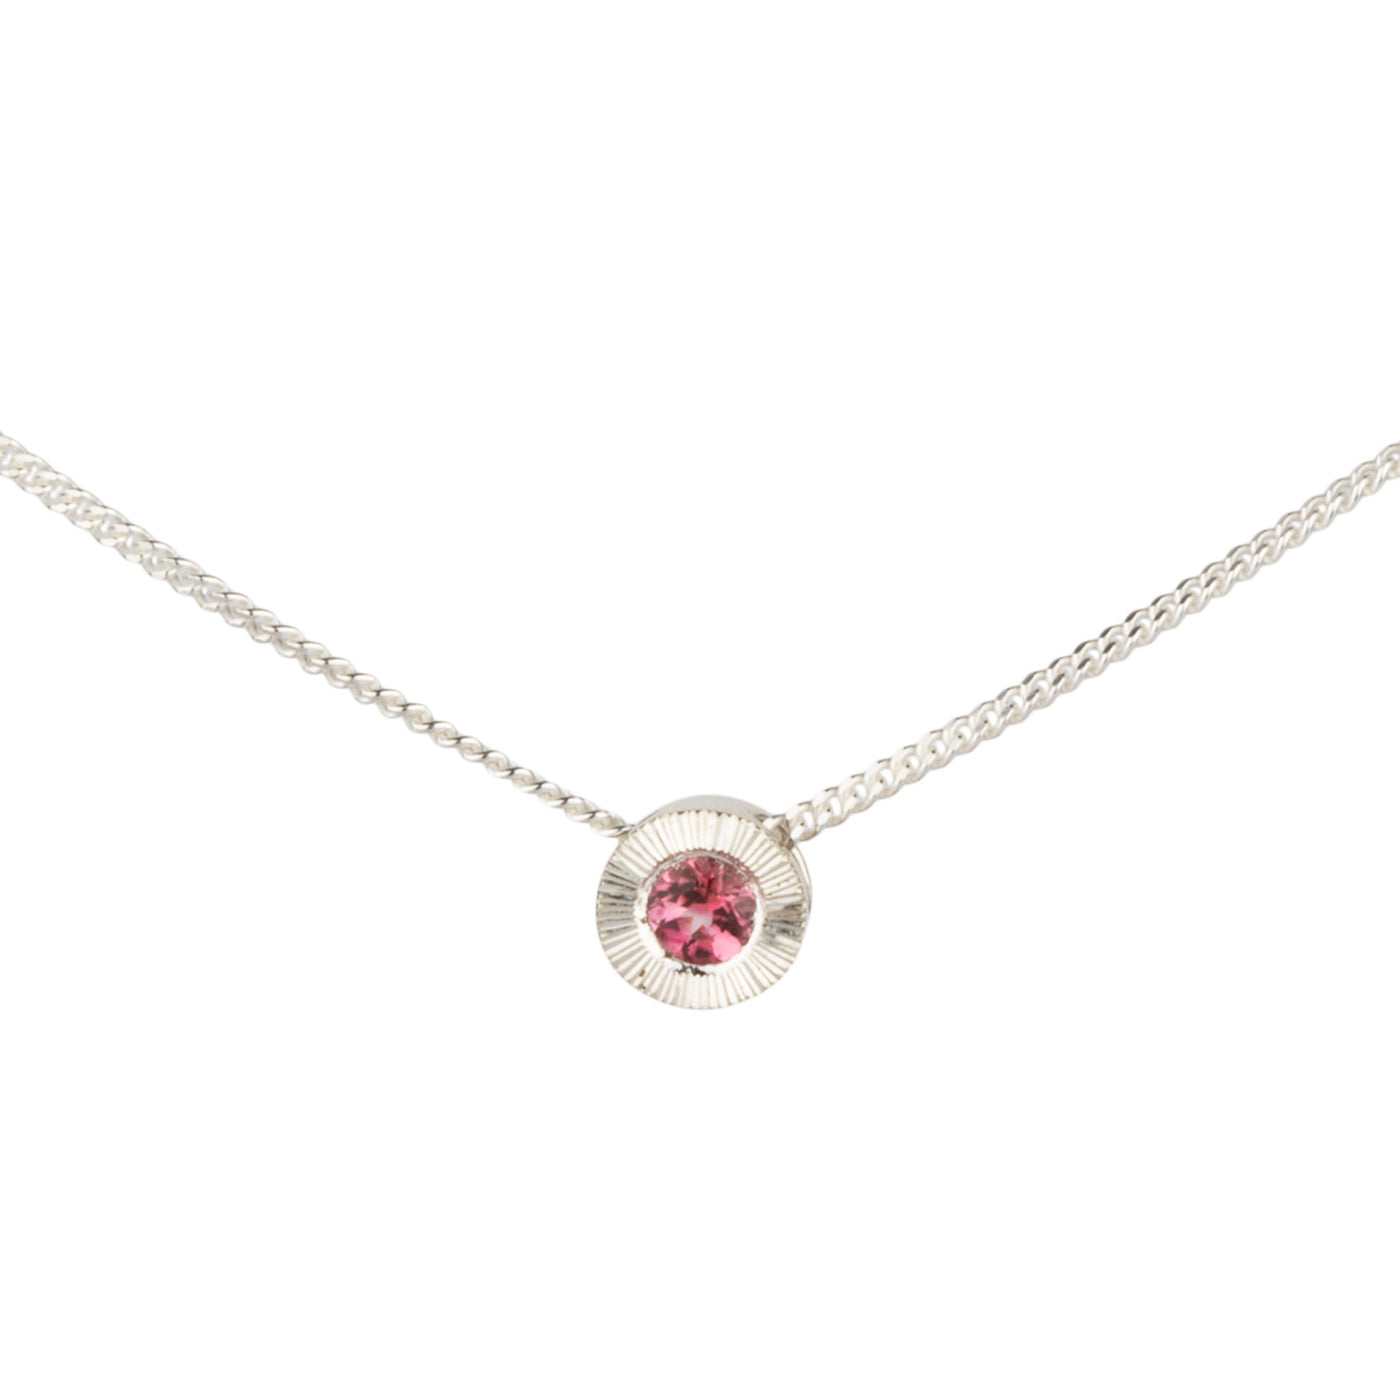 October birthstone Aurora slide necklace with pink tourmaline in silver